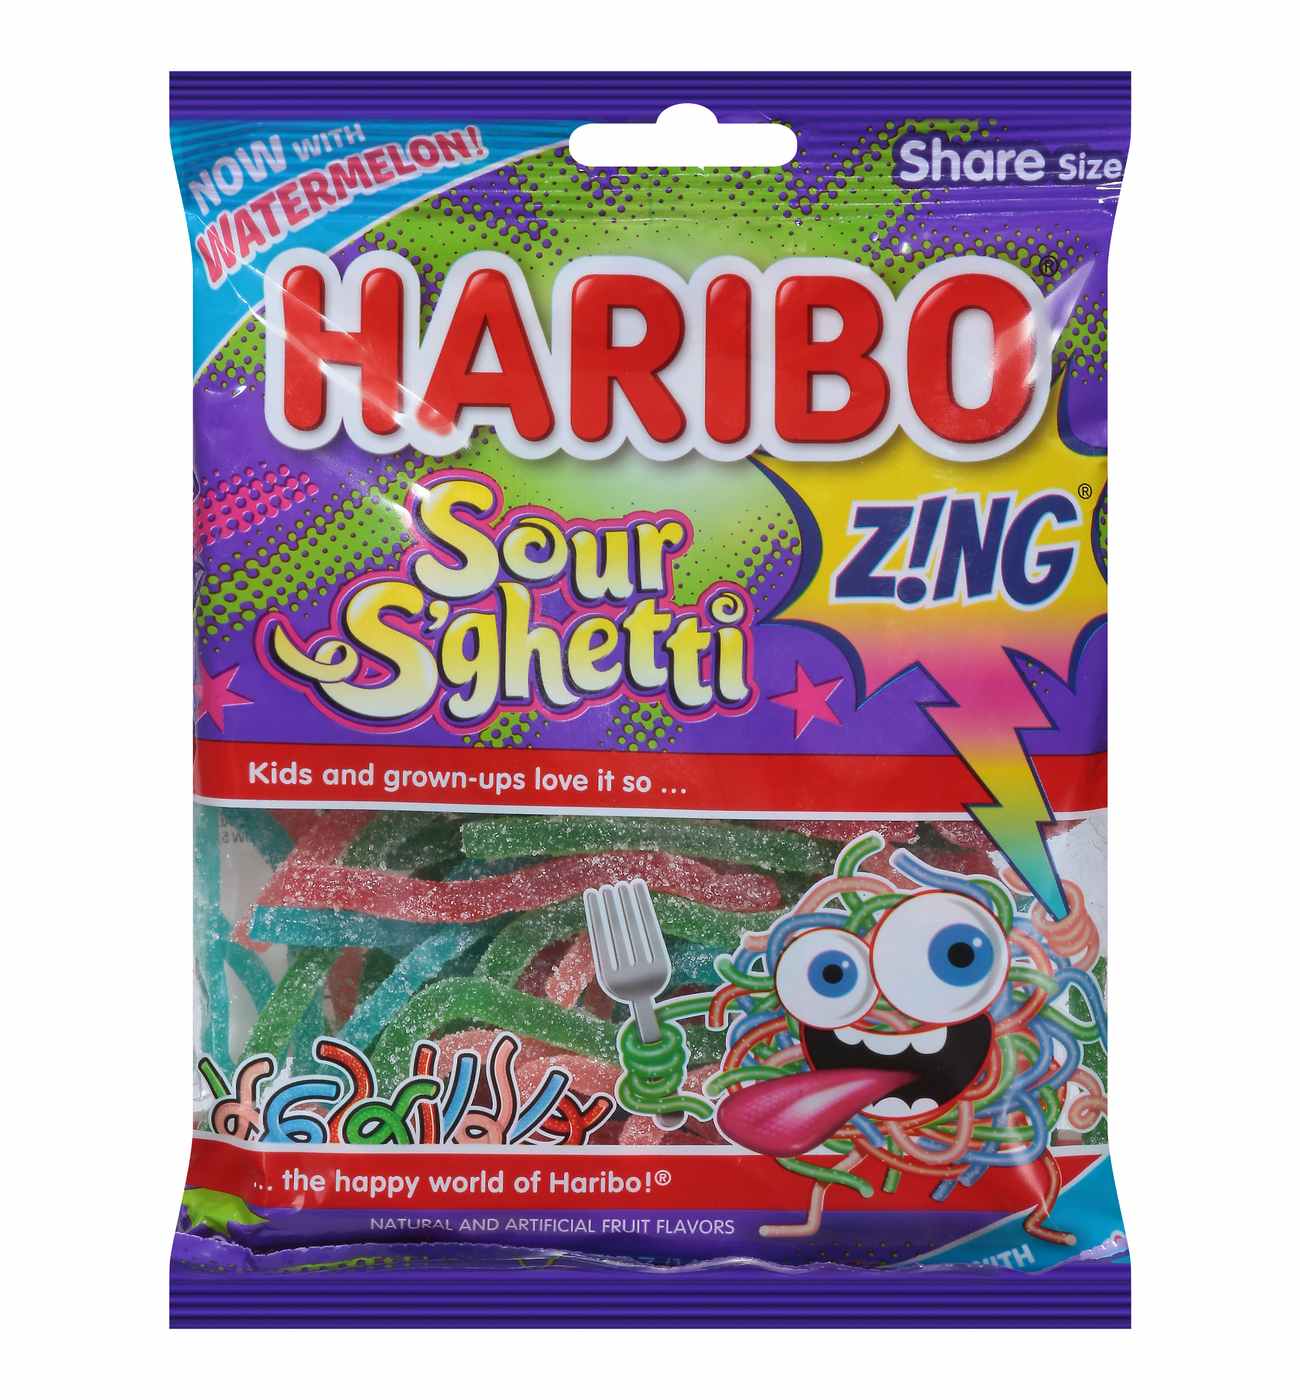 Haribo Zing Sour S'ghetti Gummi Candy; image 1 of 2